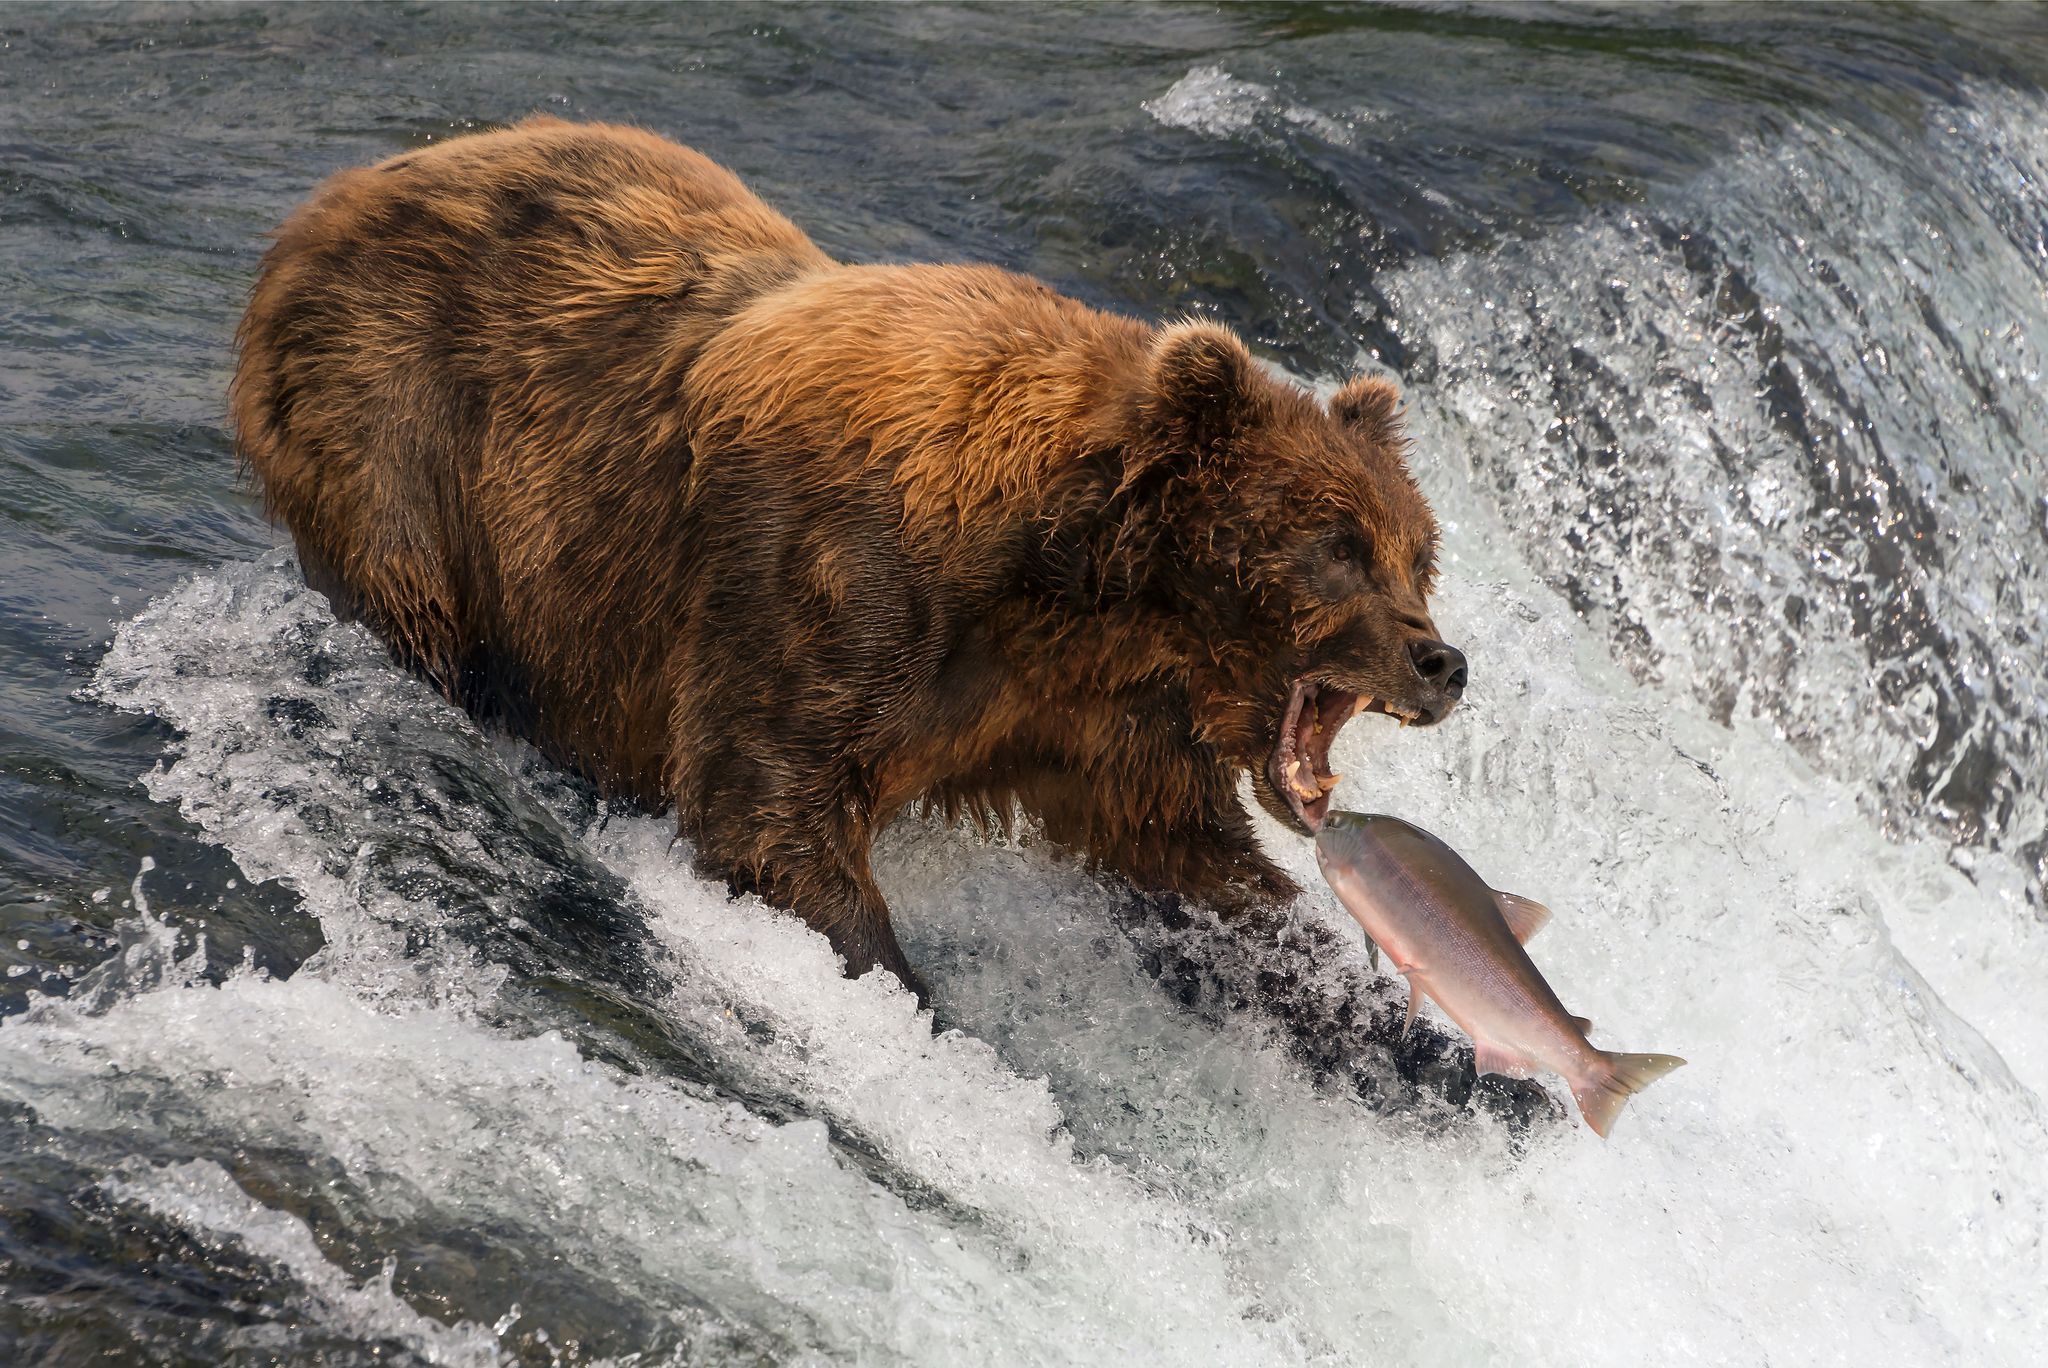 Bear catching fish